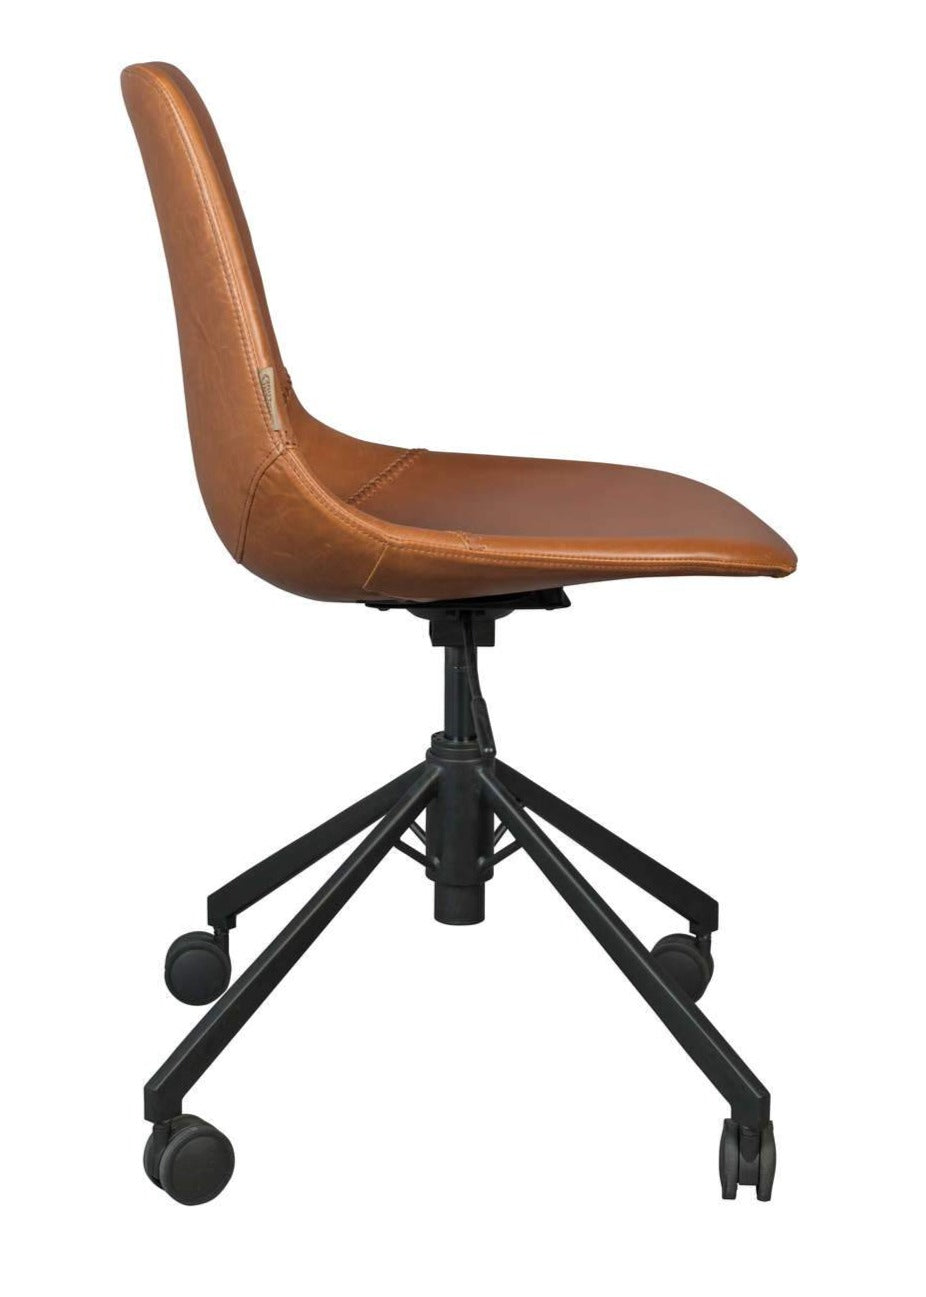 Office chair FRANKY eco leather brown, Dutchbone, Eye on Design